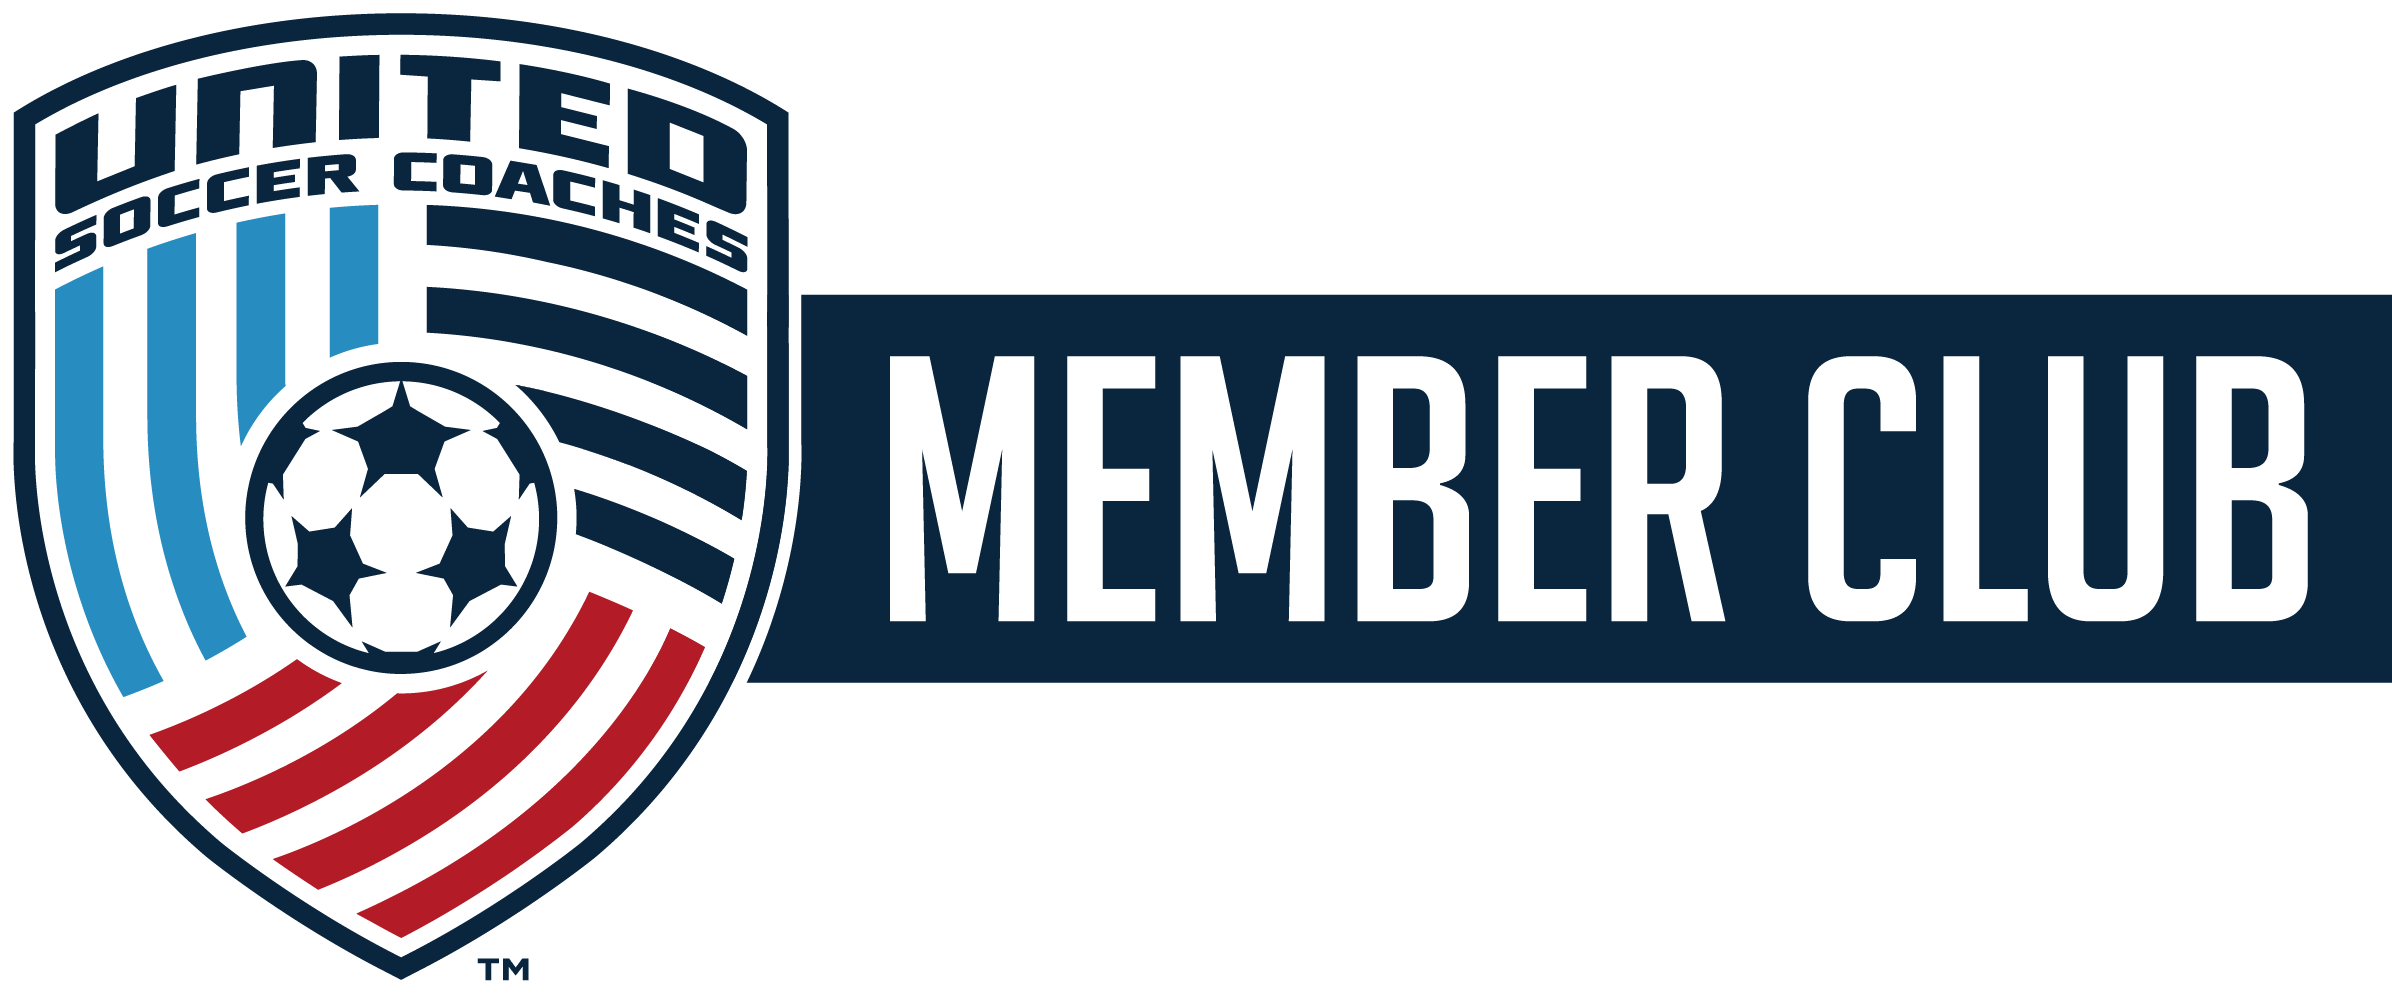 Coaches Logo - Soccer Coaching Resources